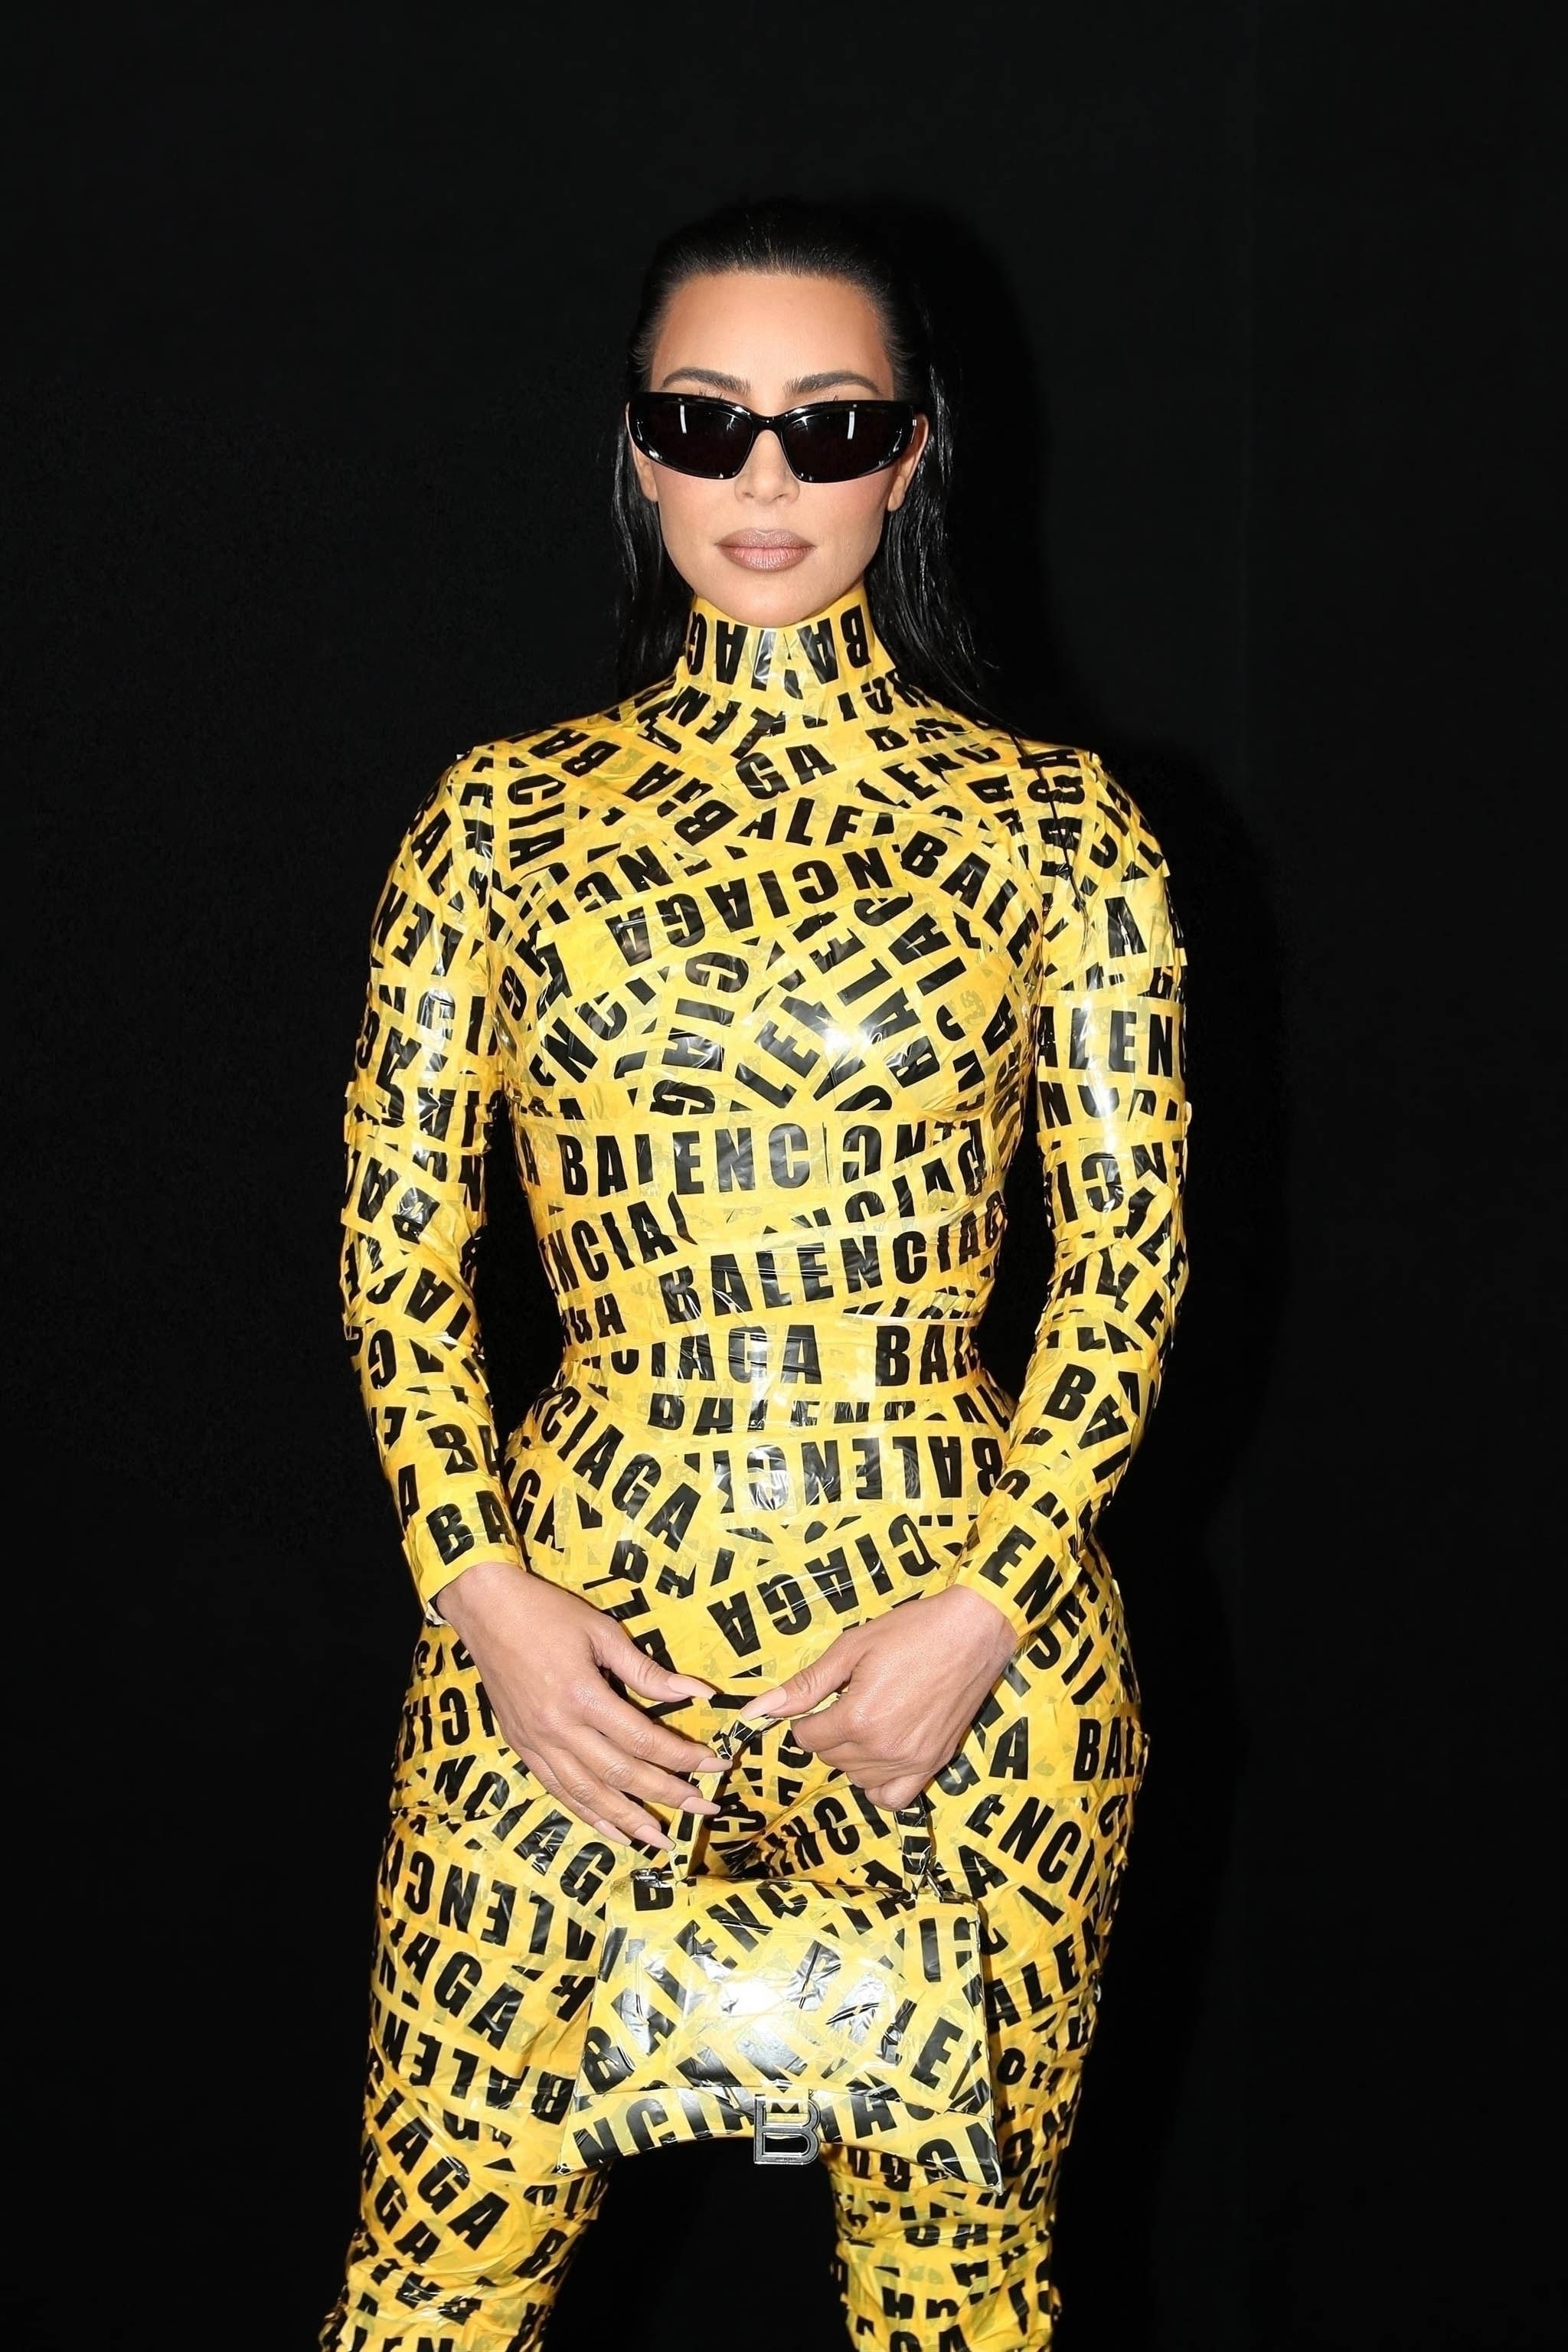 Kim Kardashian Wears a Balenciaga Cargo Dress While Out in NYC